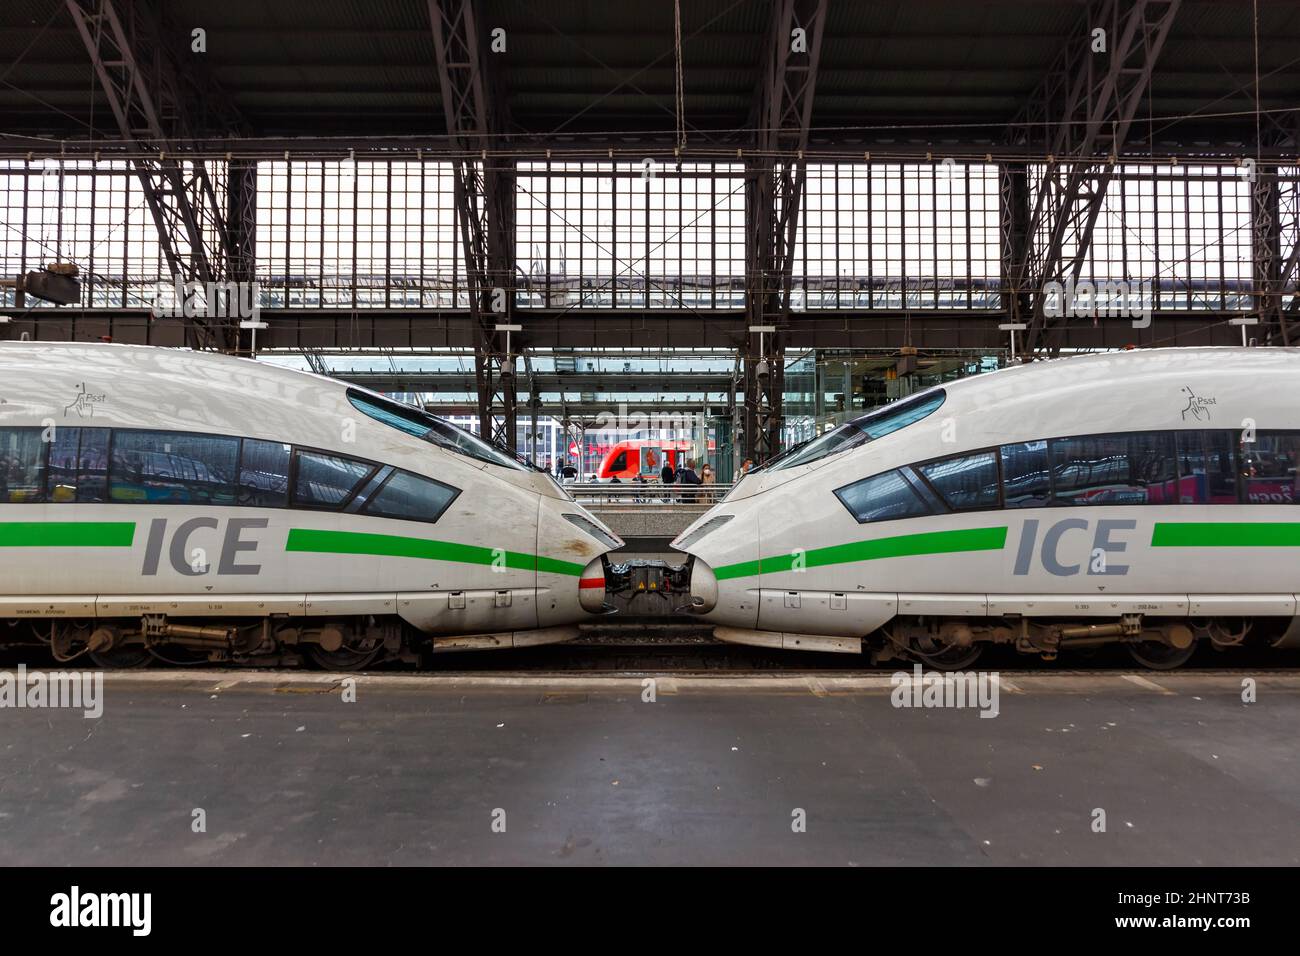 ICE 3 high-speed train at Cologne Köln main railway station Hauptbahnhof Hbf in Germany Stock Photo